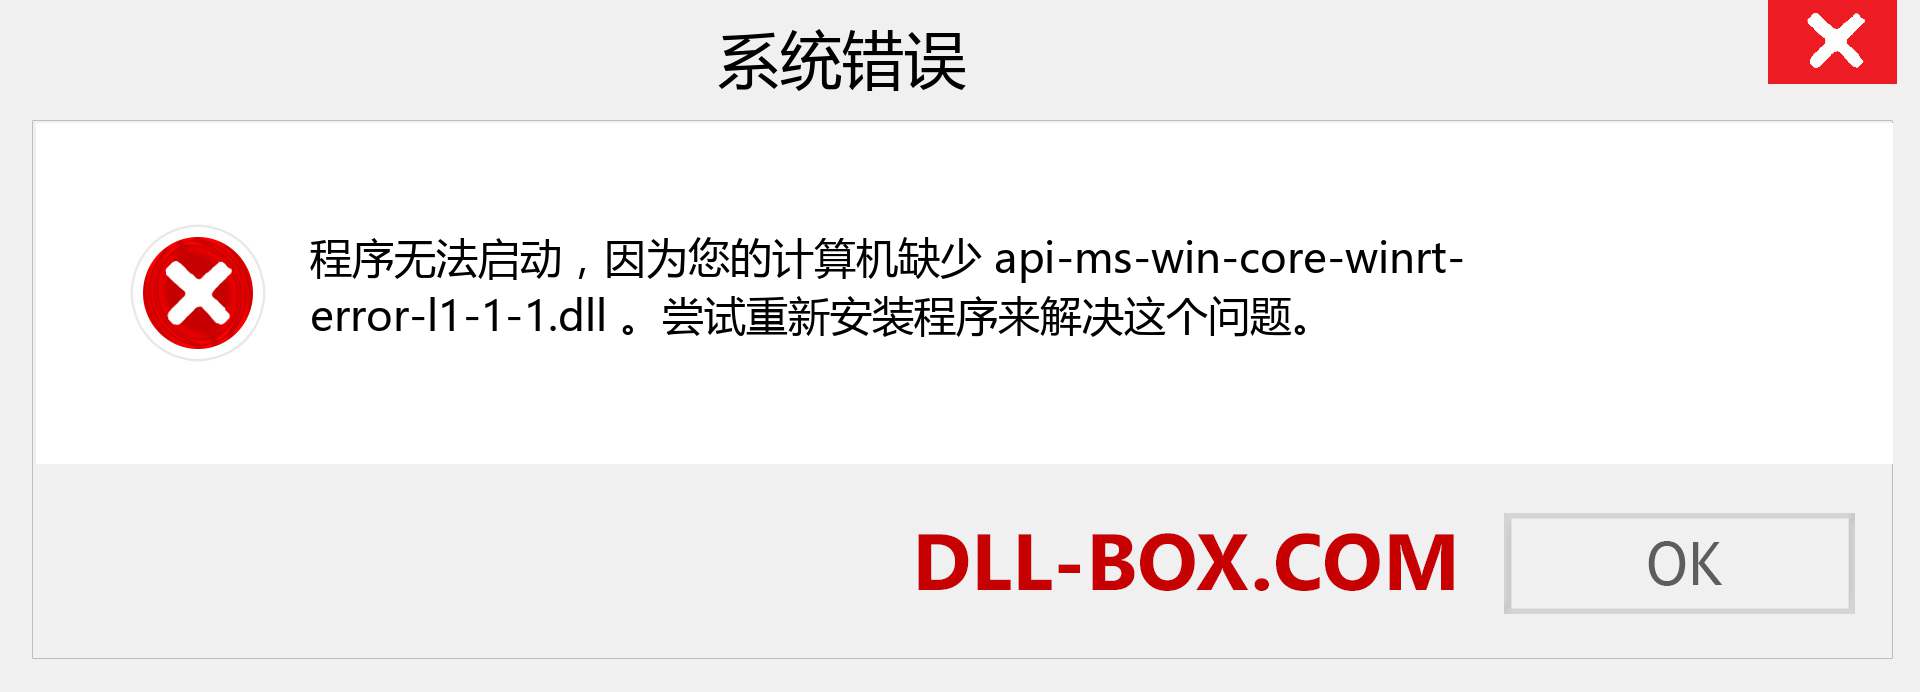 api-ms-win-core-winrt-error-l1-1-1.dll 文件丢失？。 适用于 Windows 7、8、10 的下载 - 修复 Windows、照片、图像上的 api-ms-win-core-winrt-error-l1-1-1 dll 丢失错误